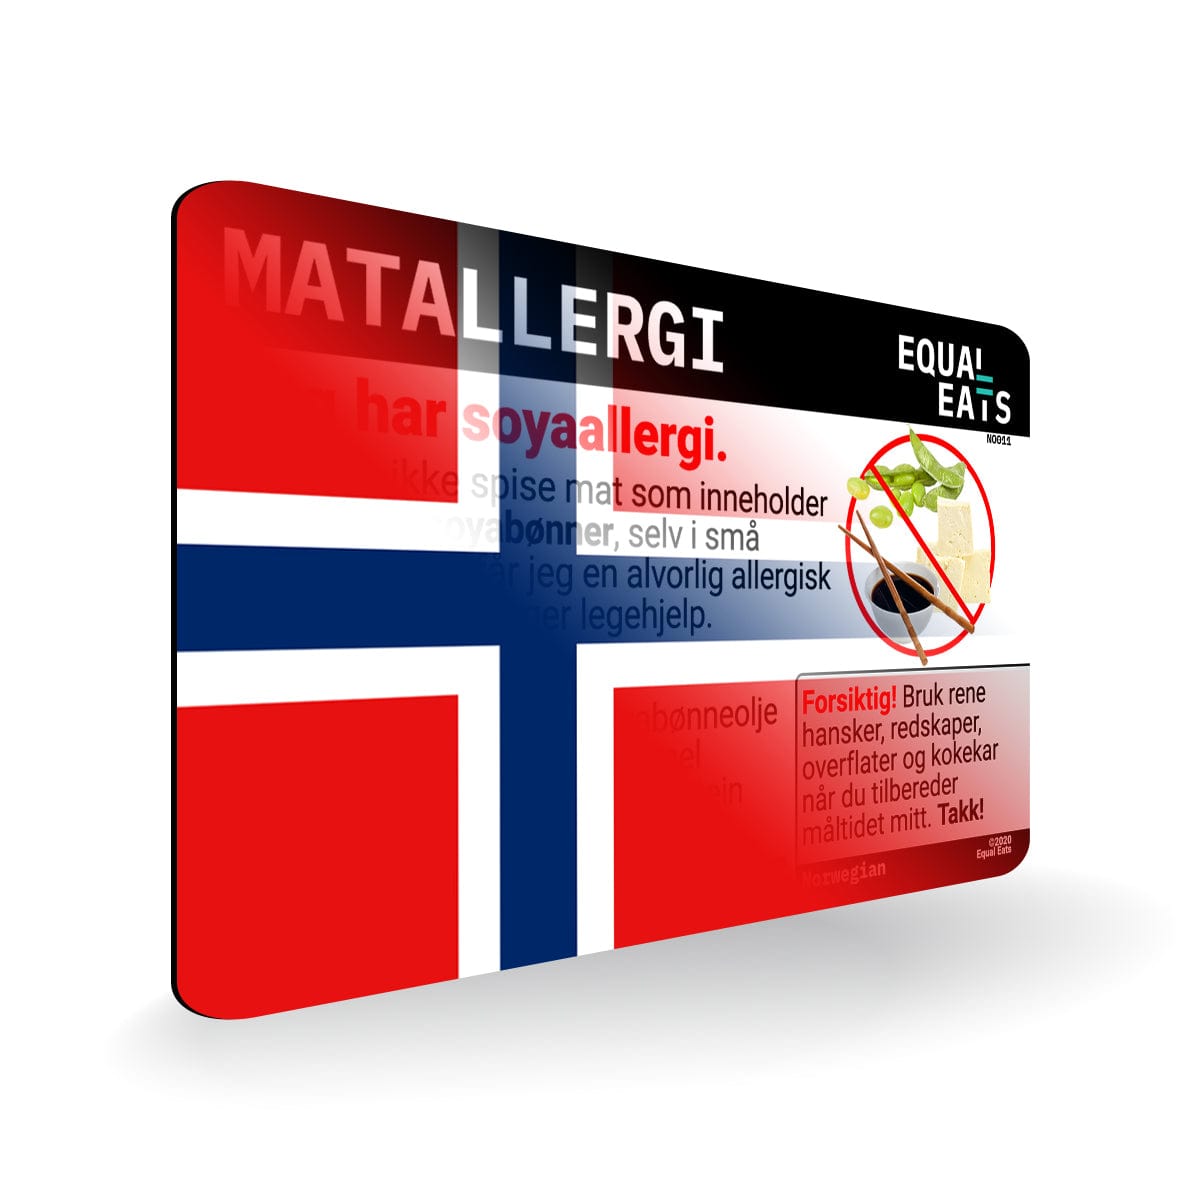 Soy Allergy in Norwegian. Soy Allergy Card for Norway